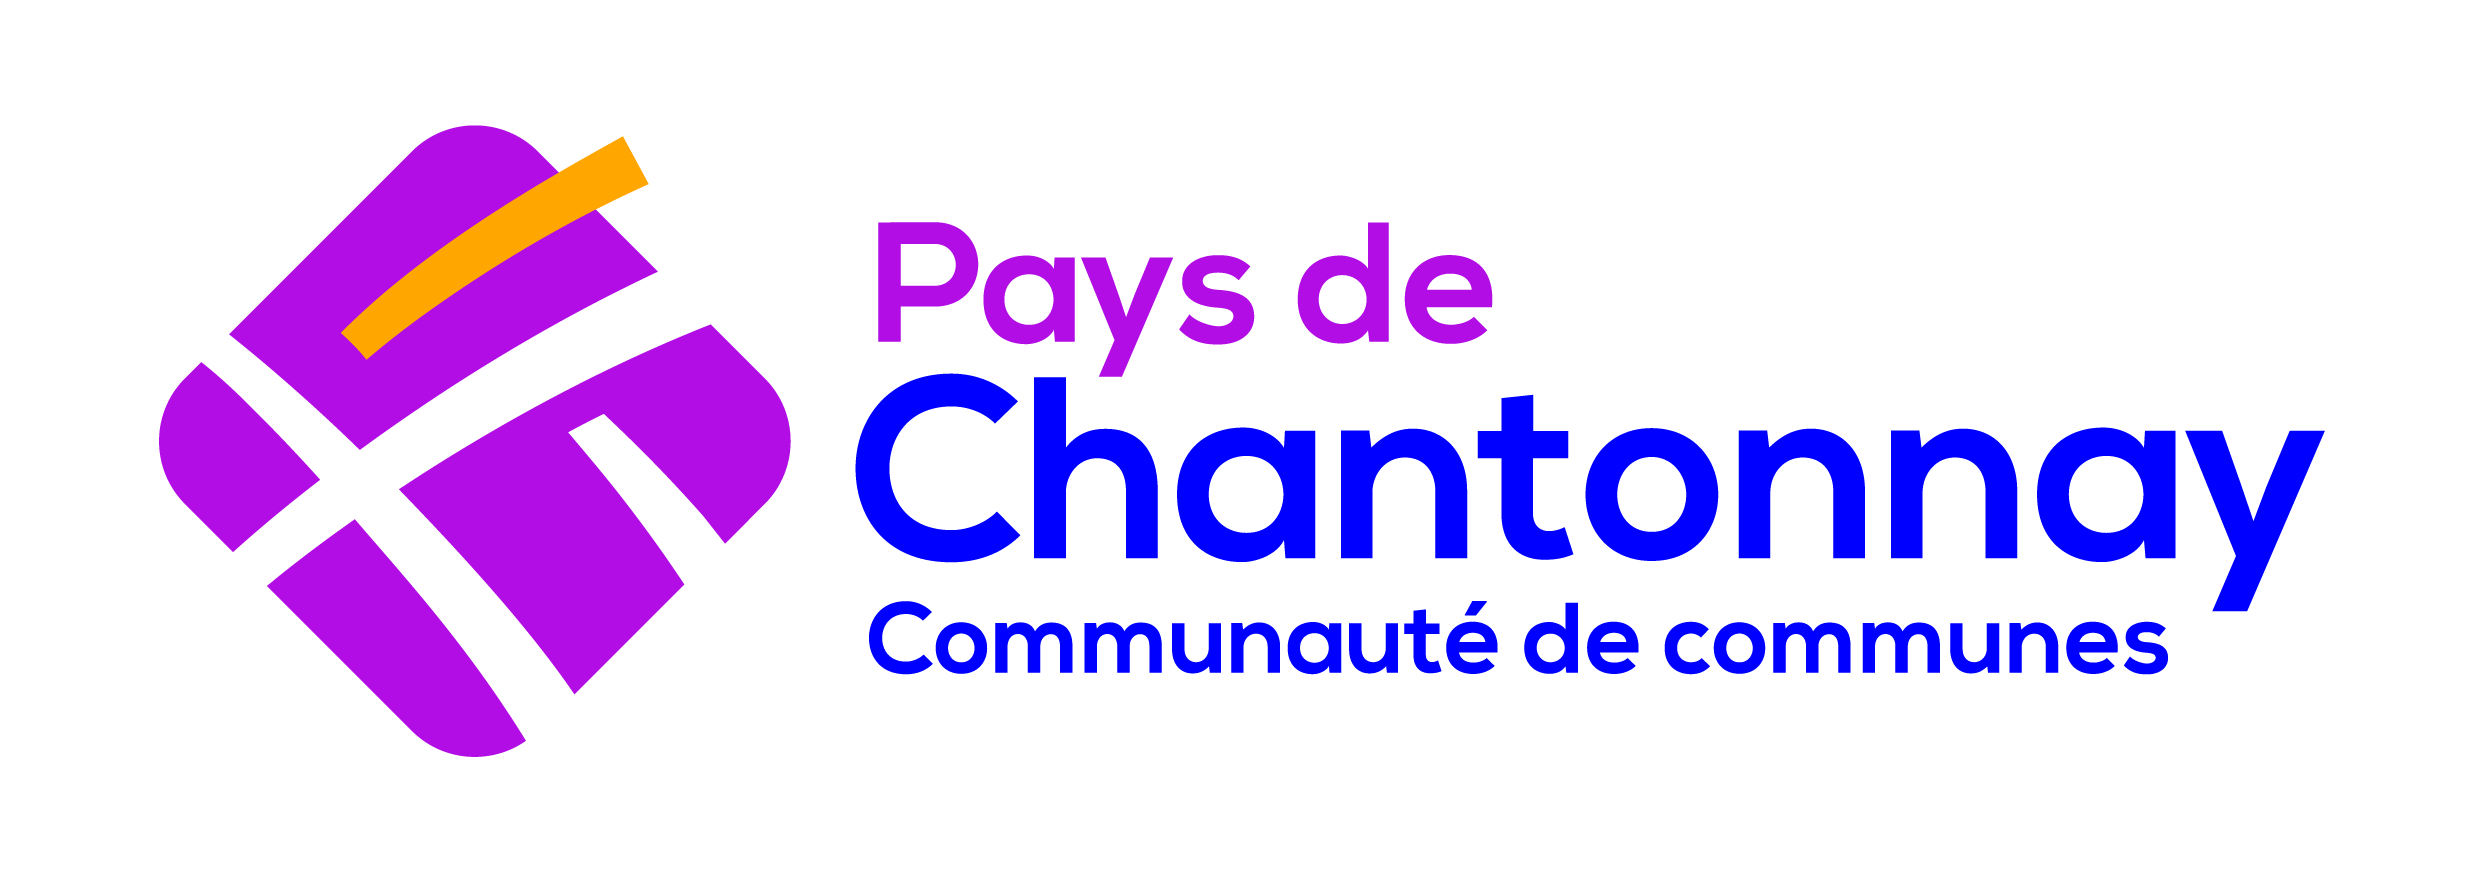 Logo Pays de Chantonnay_CMJN.jpg